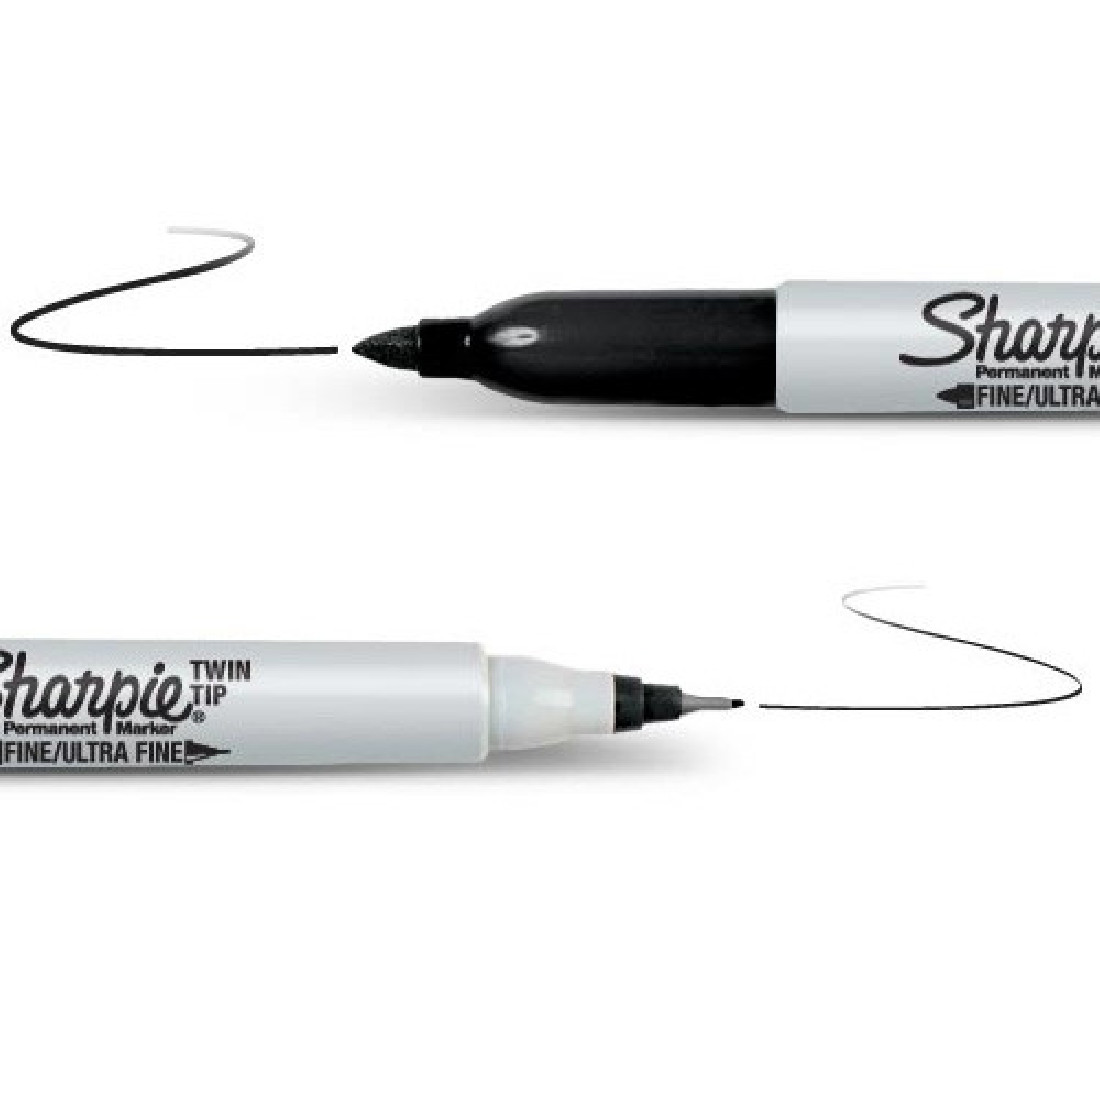 Sharpie Twin Tip Fine /Ultra Fine Permanent Marker Black